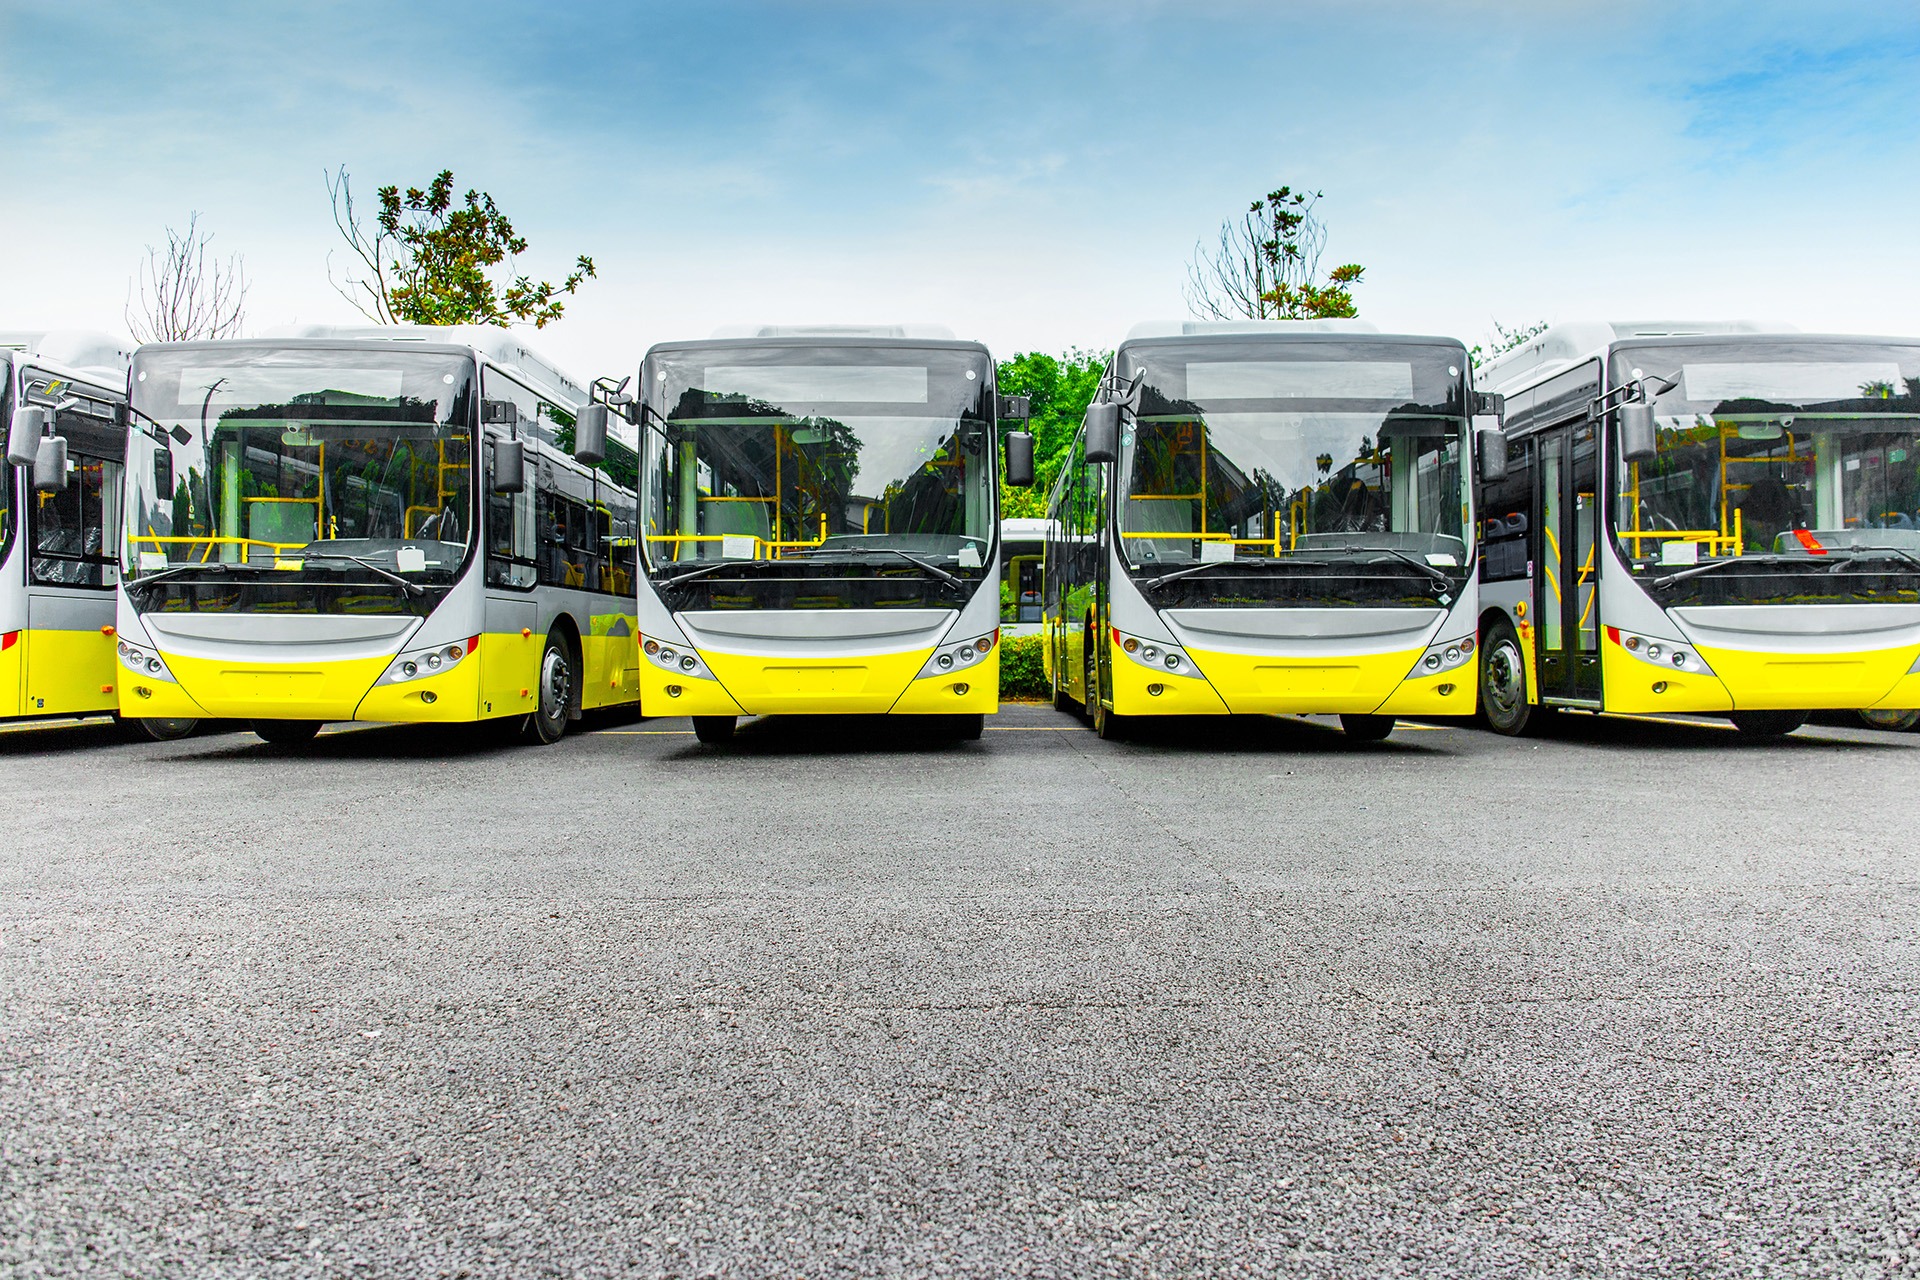 Fleet of Buses